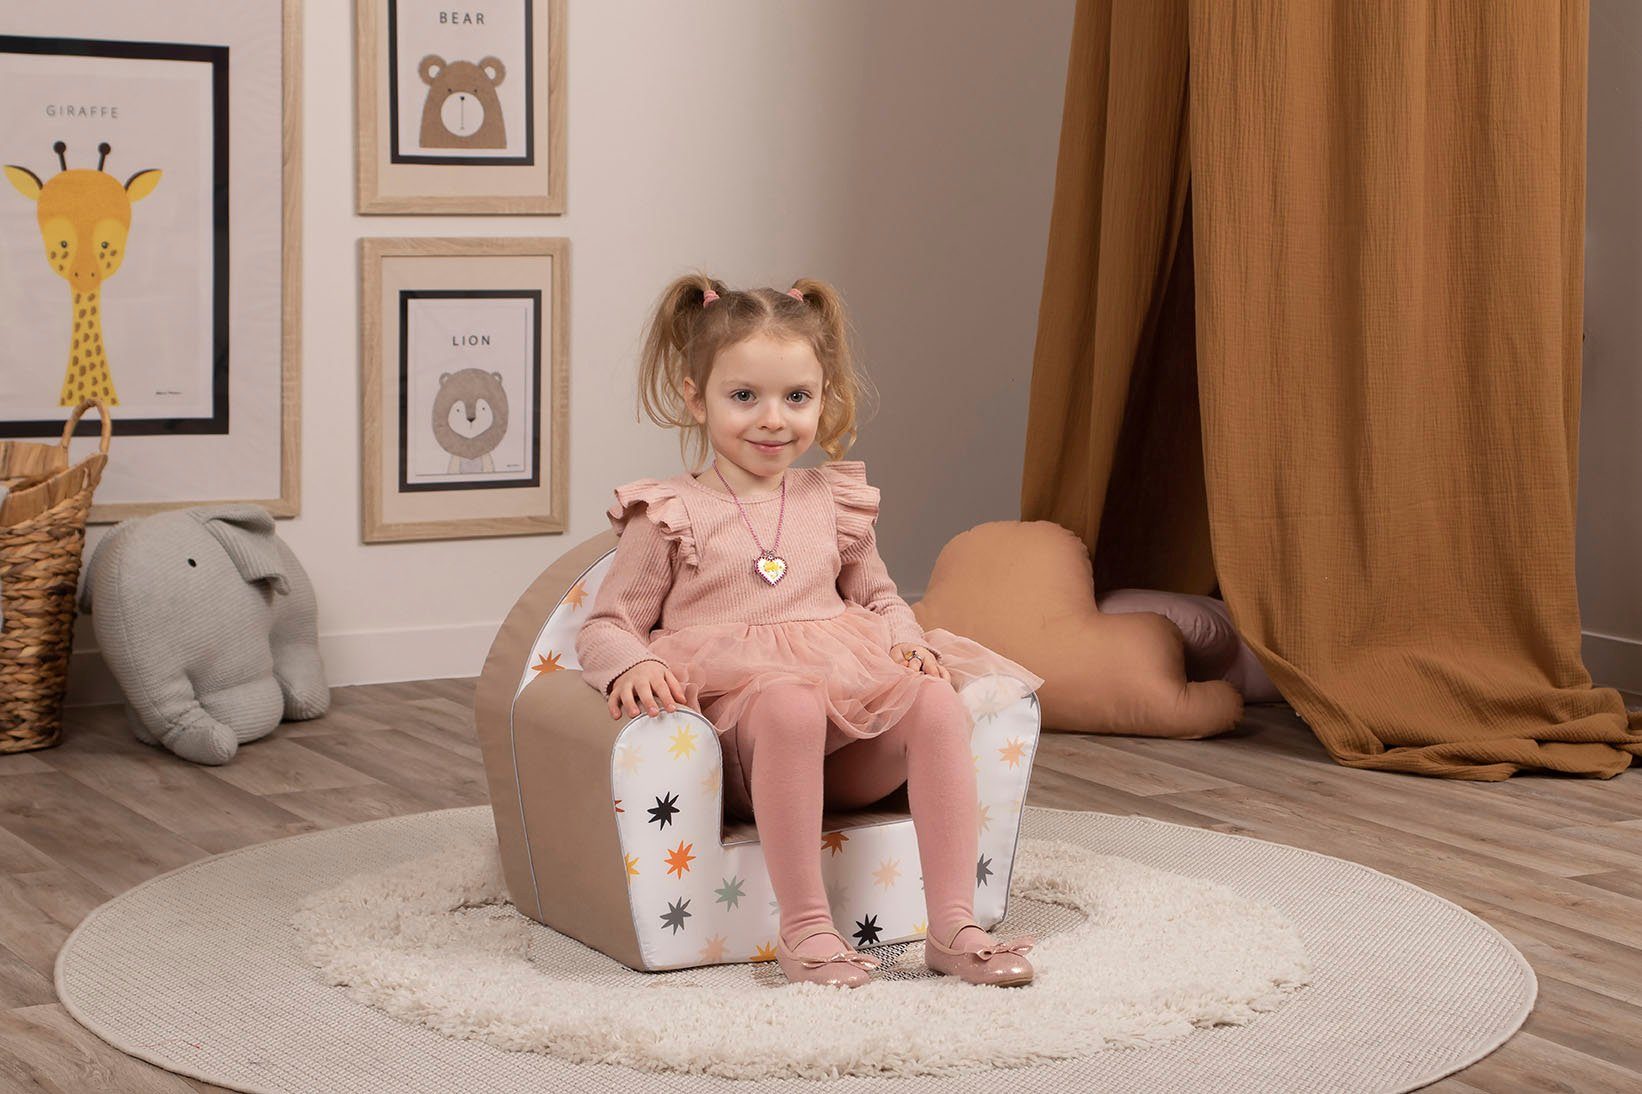 Kinder; Knorrtoys® Sessel Made Stars, Pastell Europe für in